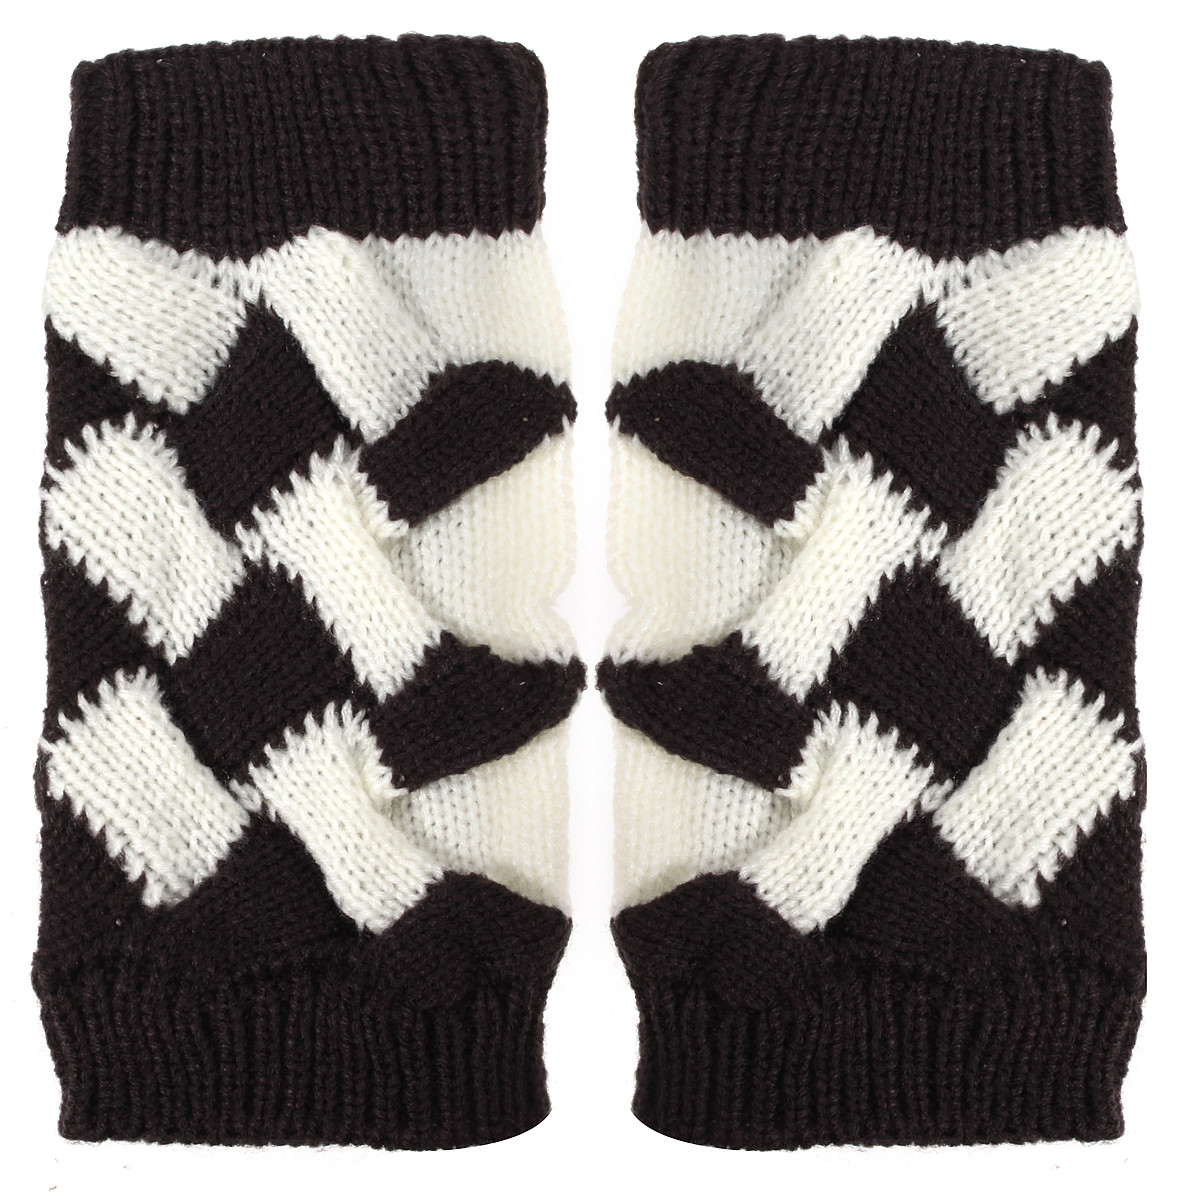 Women-Ladies-Crochet-Knitted-Fingerless-Gloves-Hand-Wrist-Warmer-Mixed-Color-Mittens-1012236